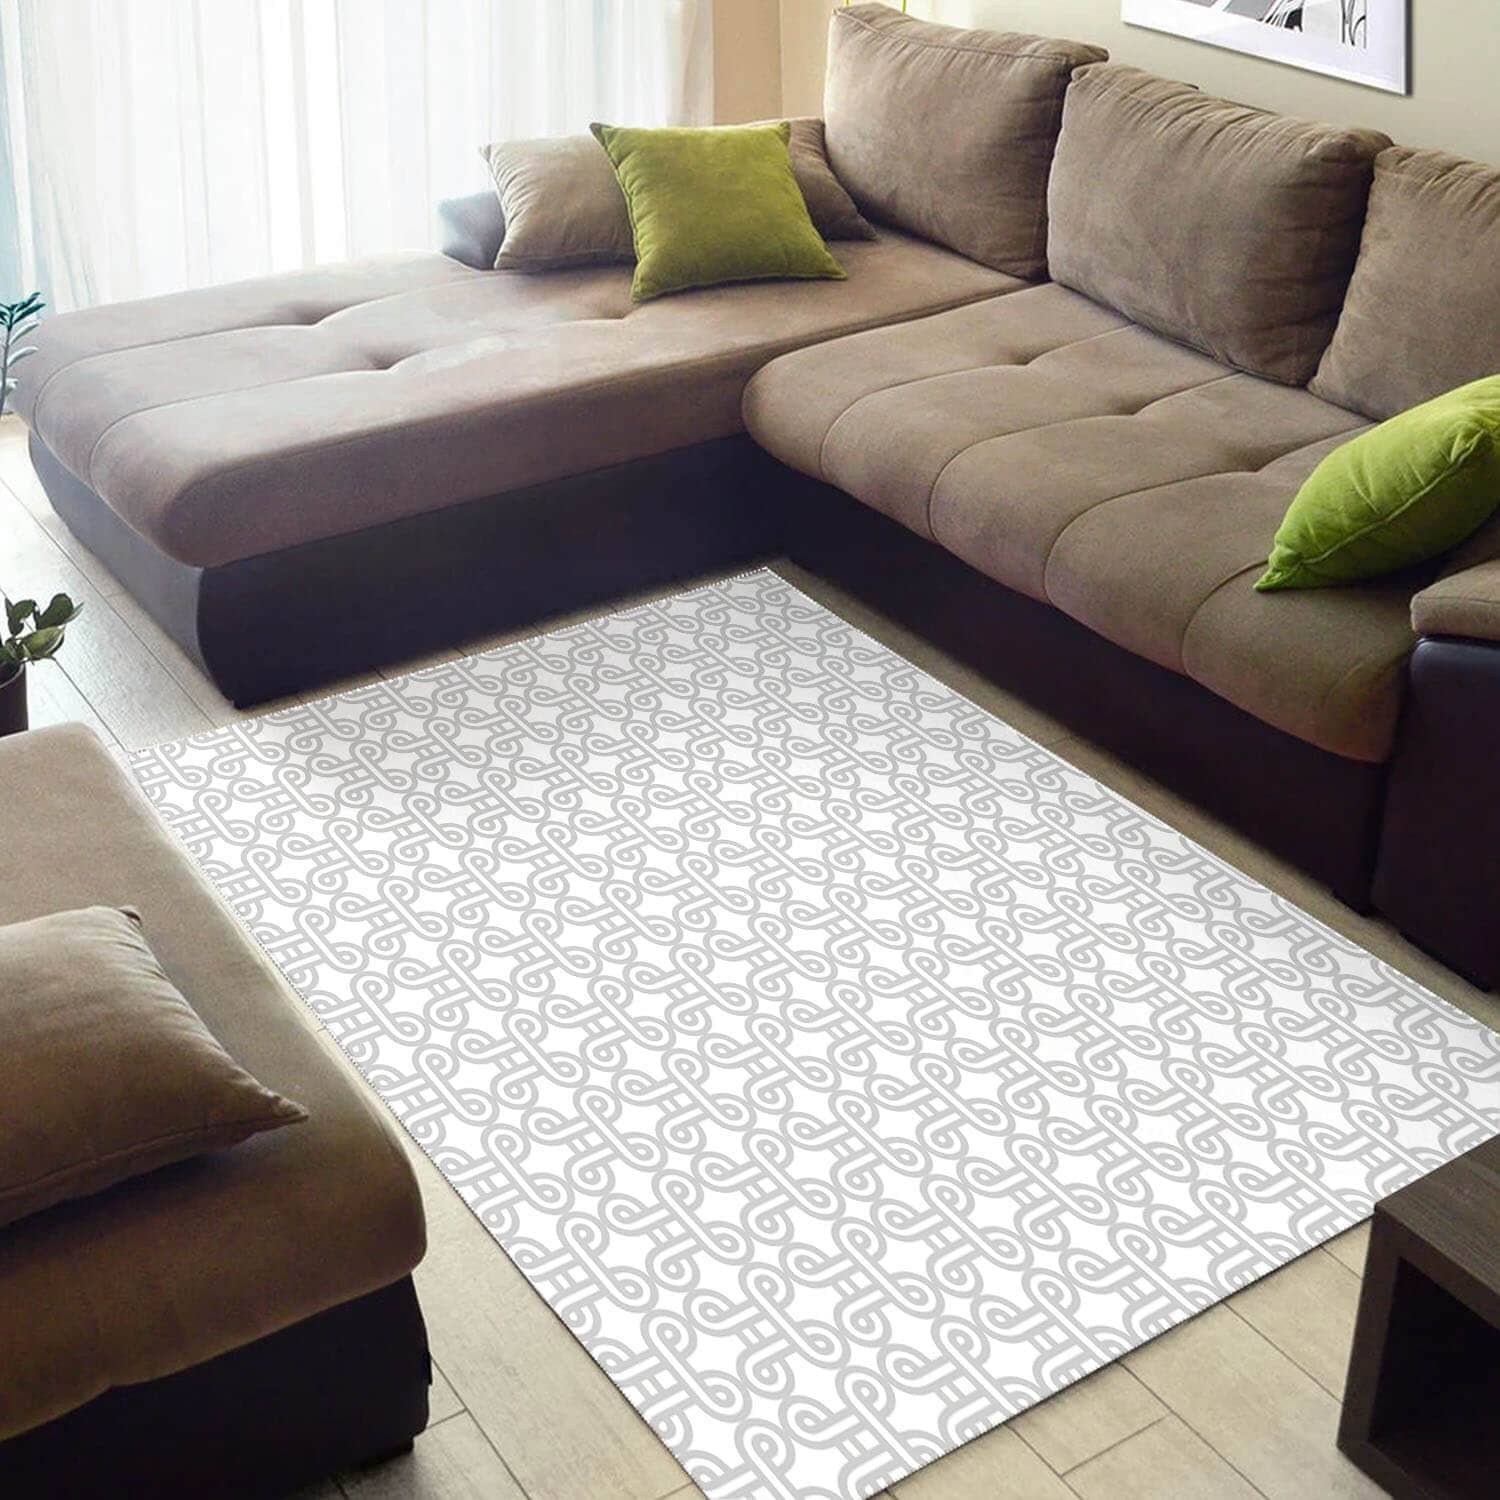 Nice African Style Modern American Art Ethnic Seamless Pattern Carpet Living Room Rug